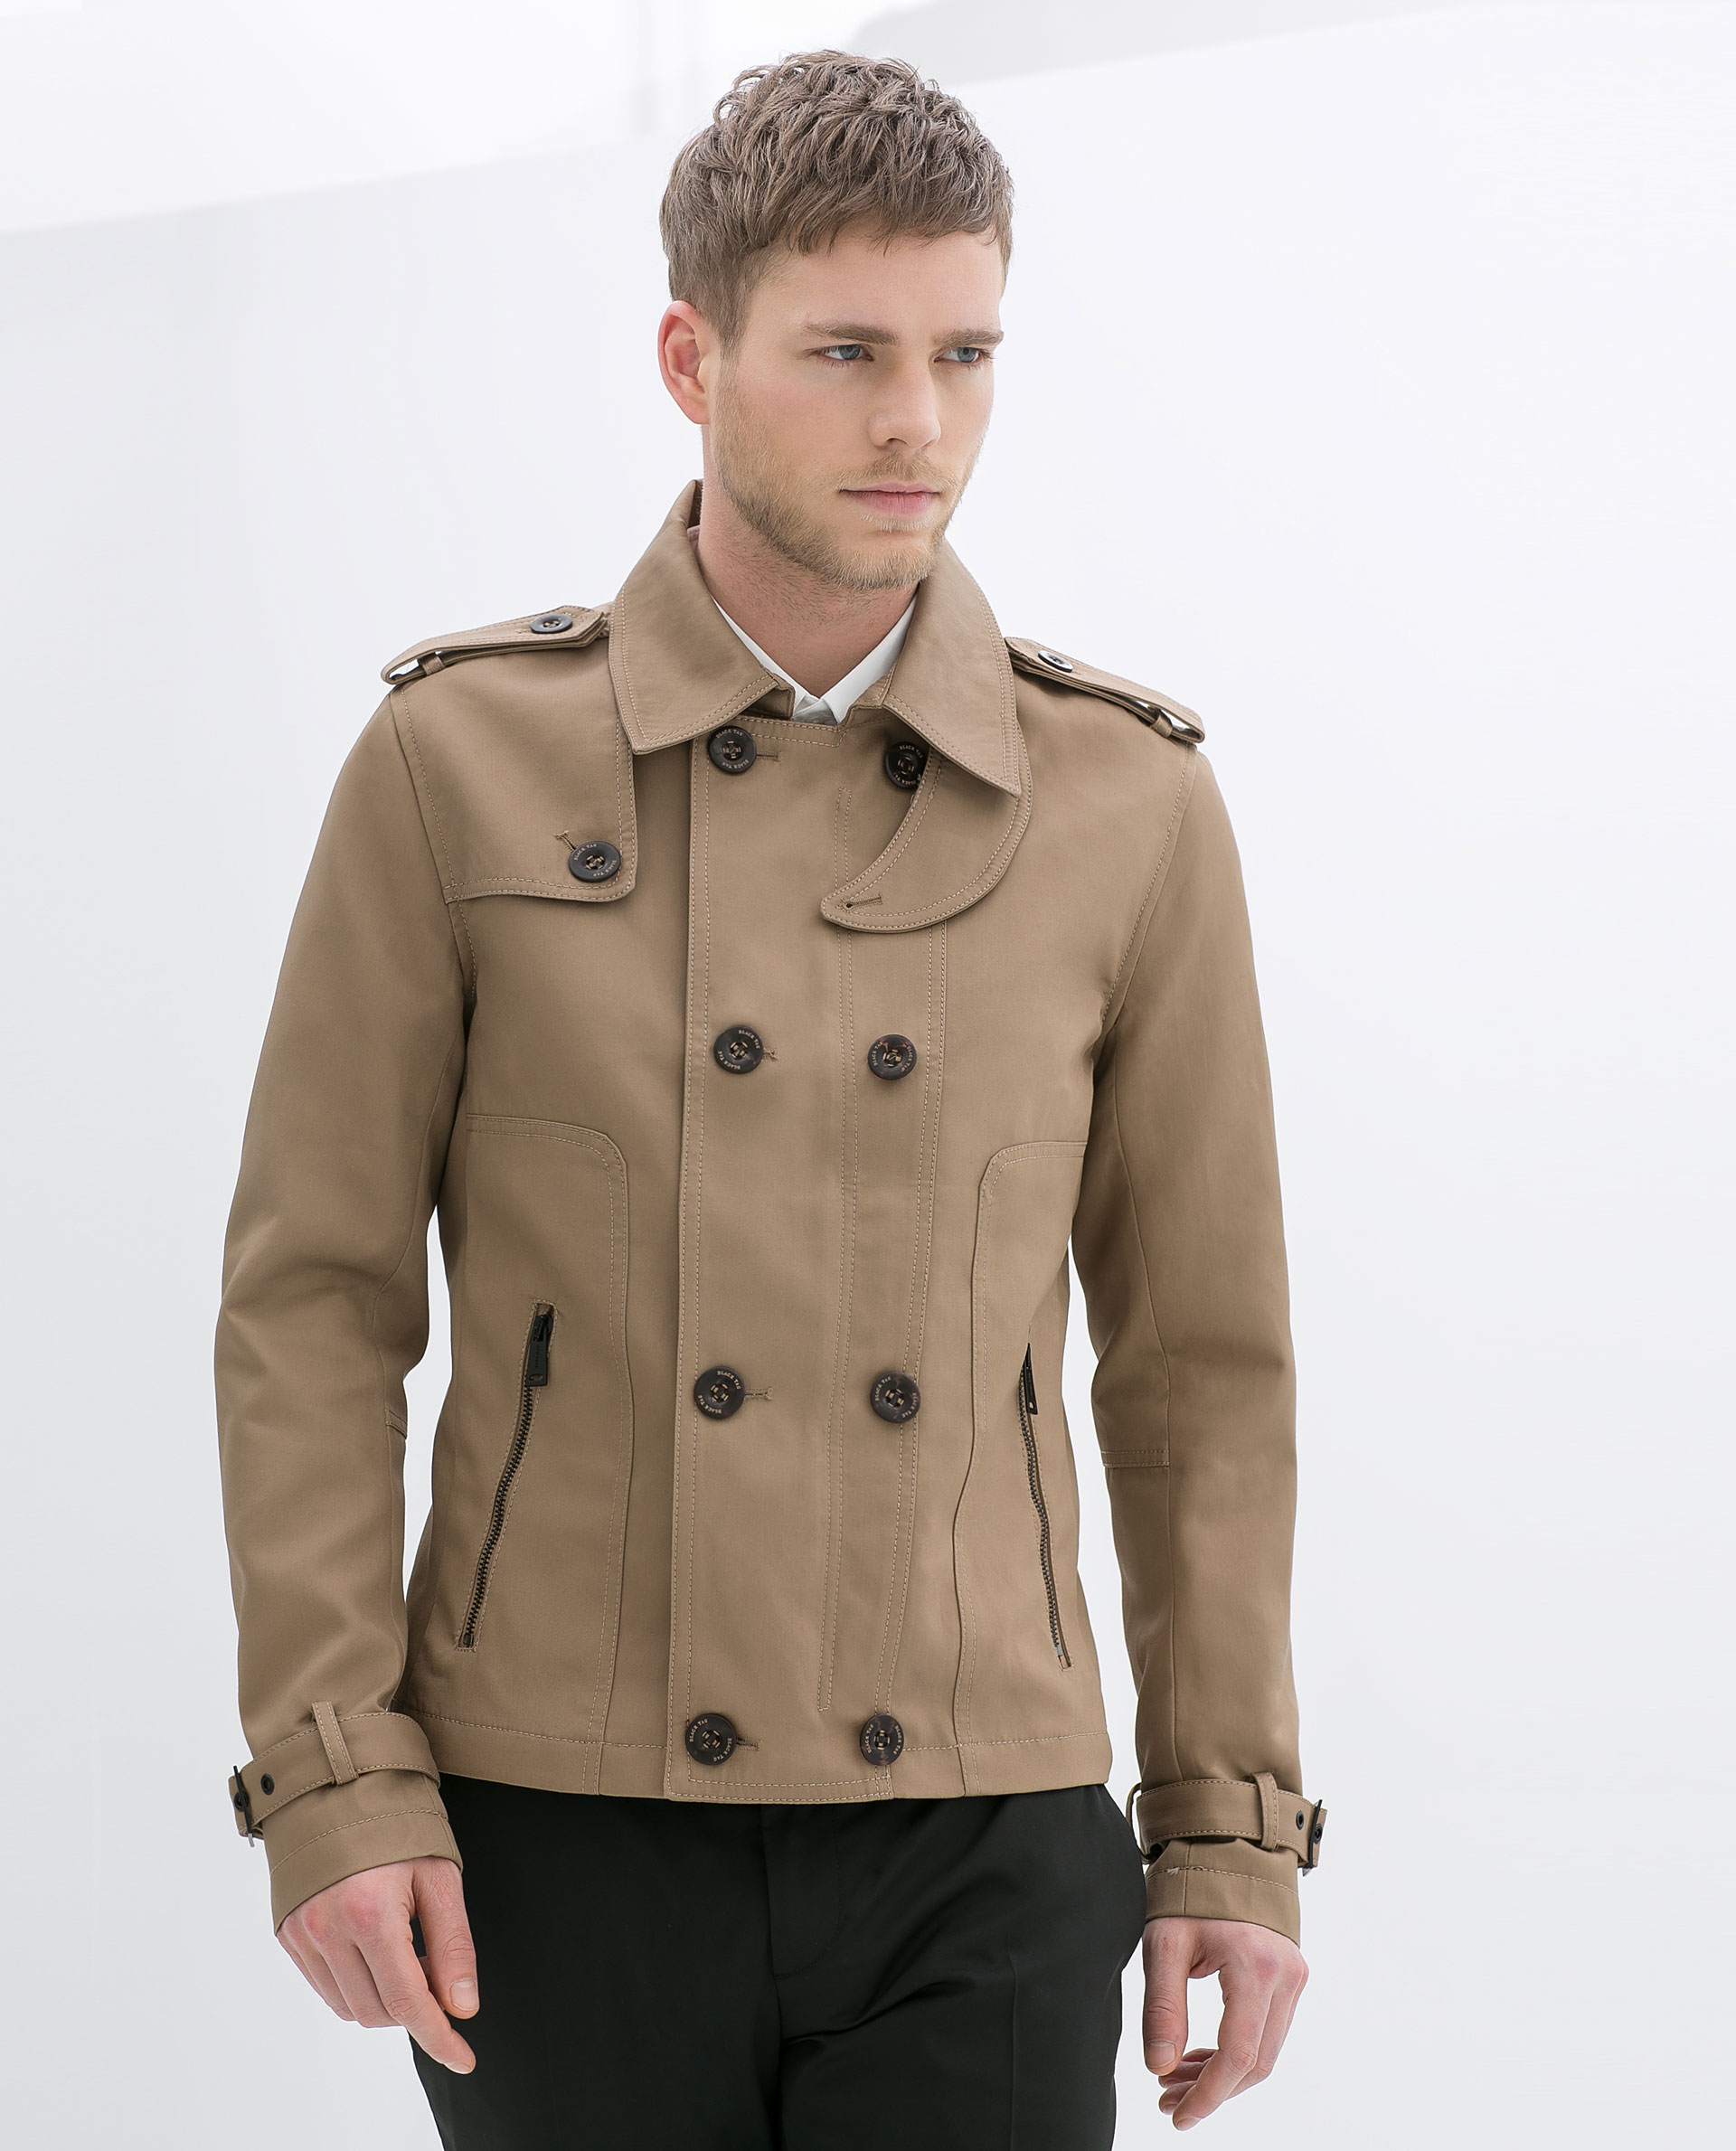 Trench Coat For Short Men - Coat Nj